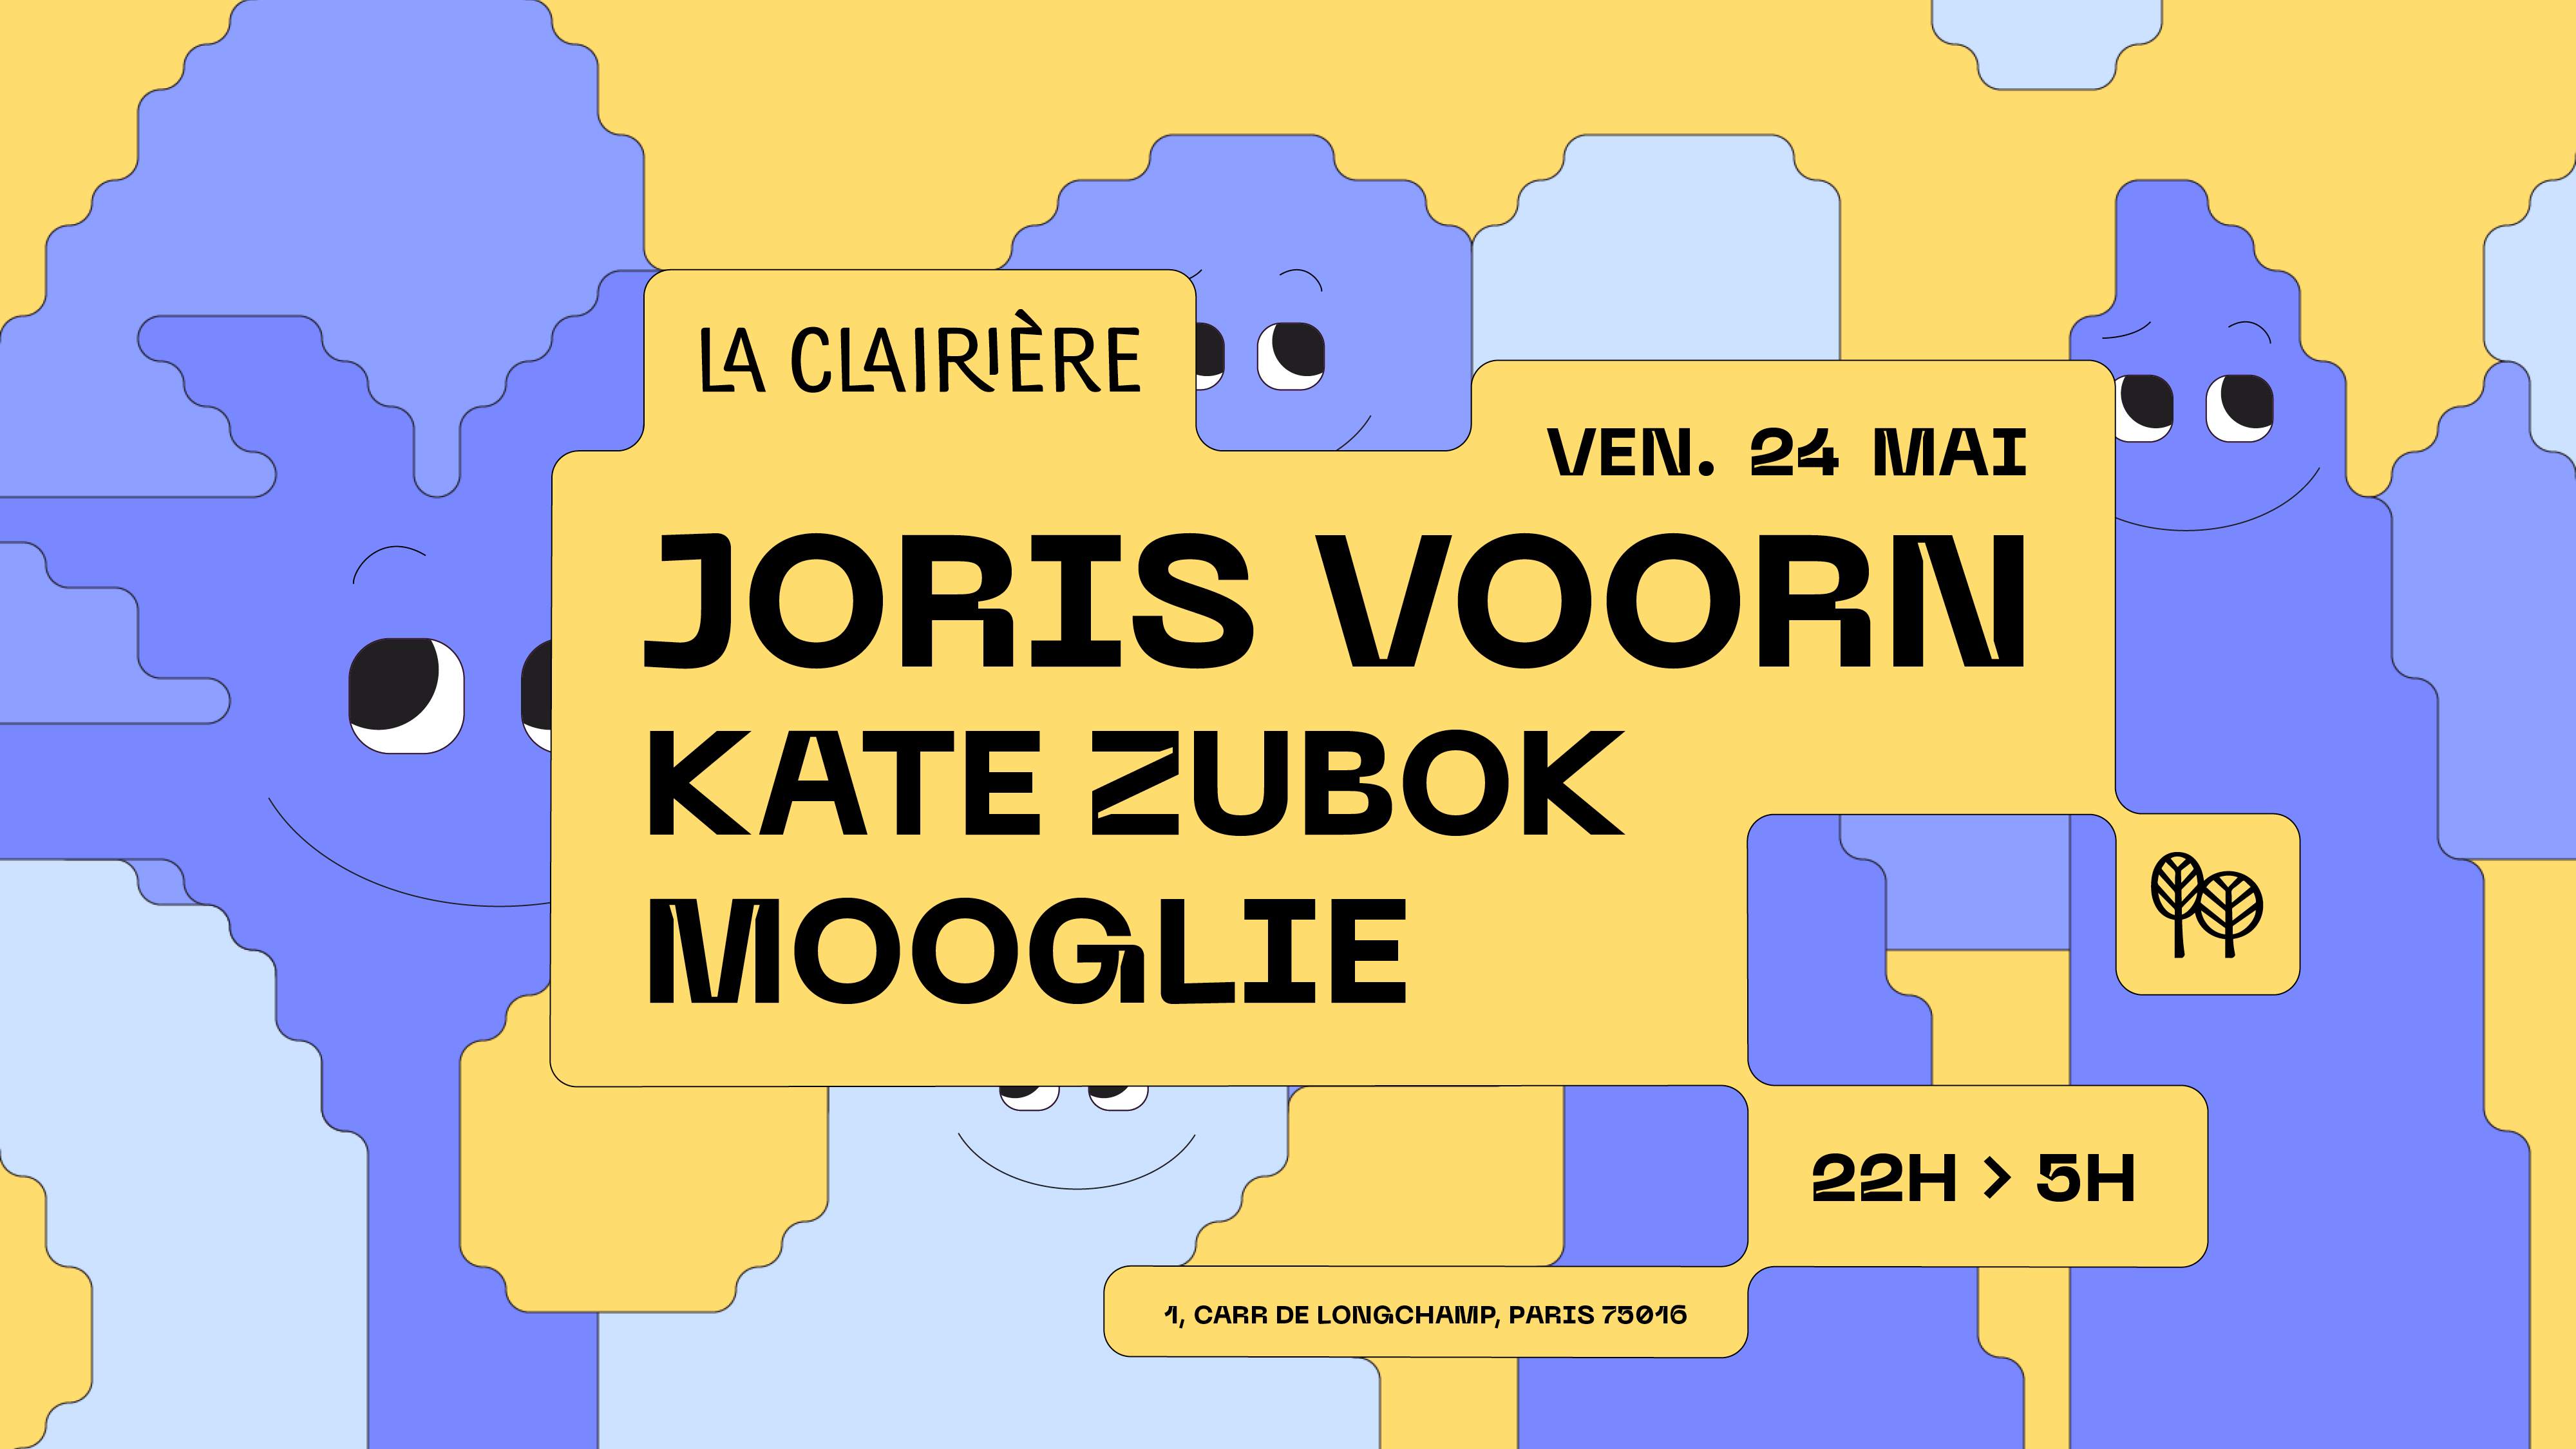 La Clairière: Joris Voorn, Kate Zubok, Mooglie - フライヤー表